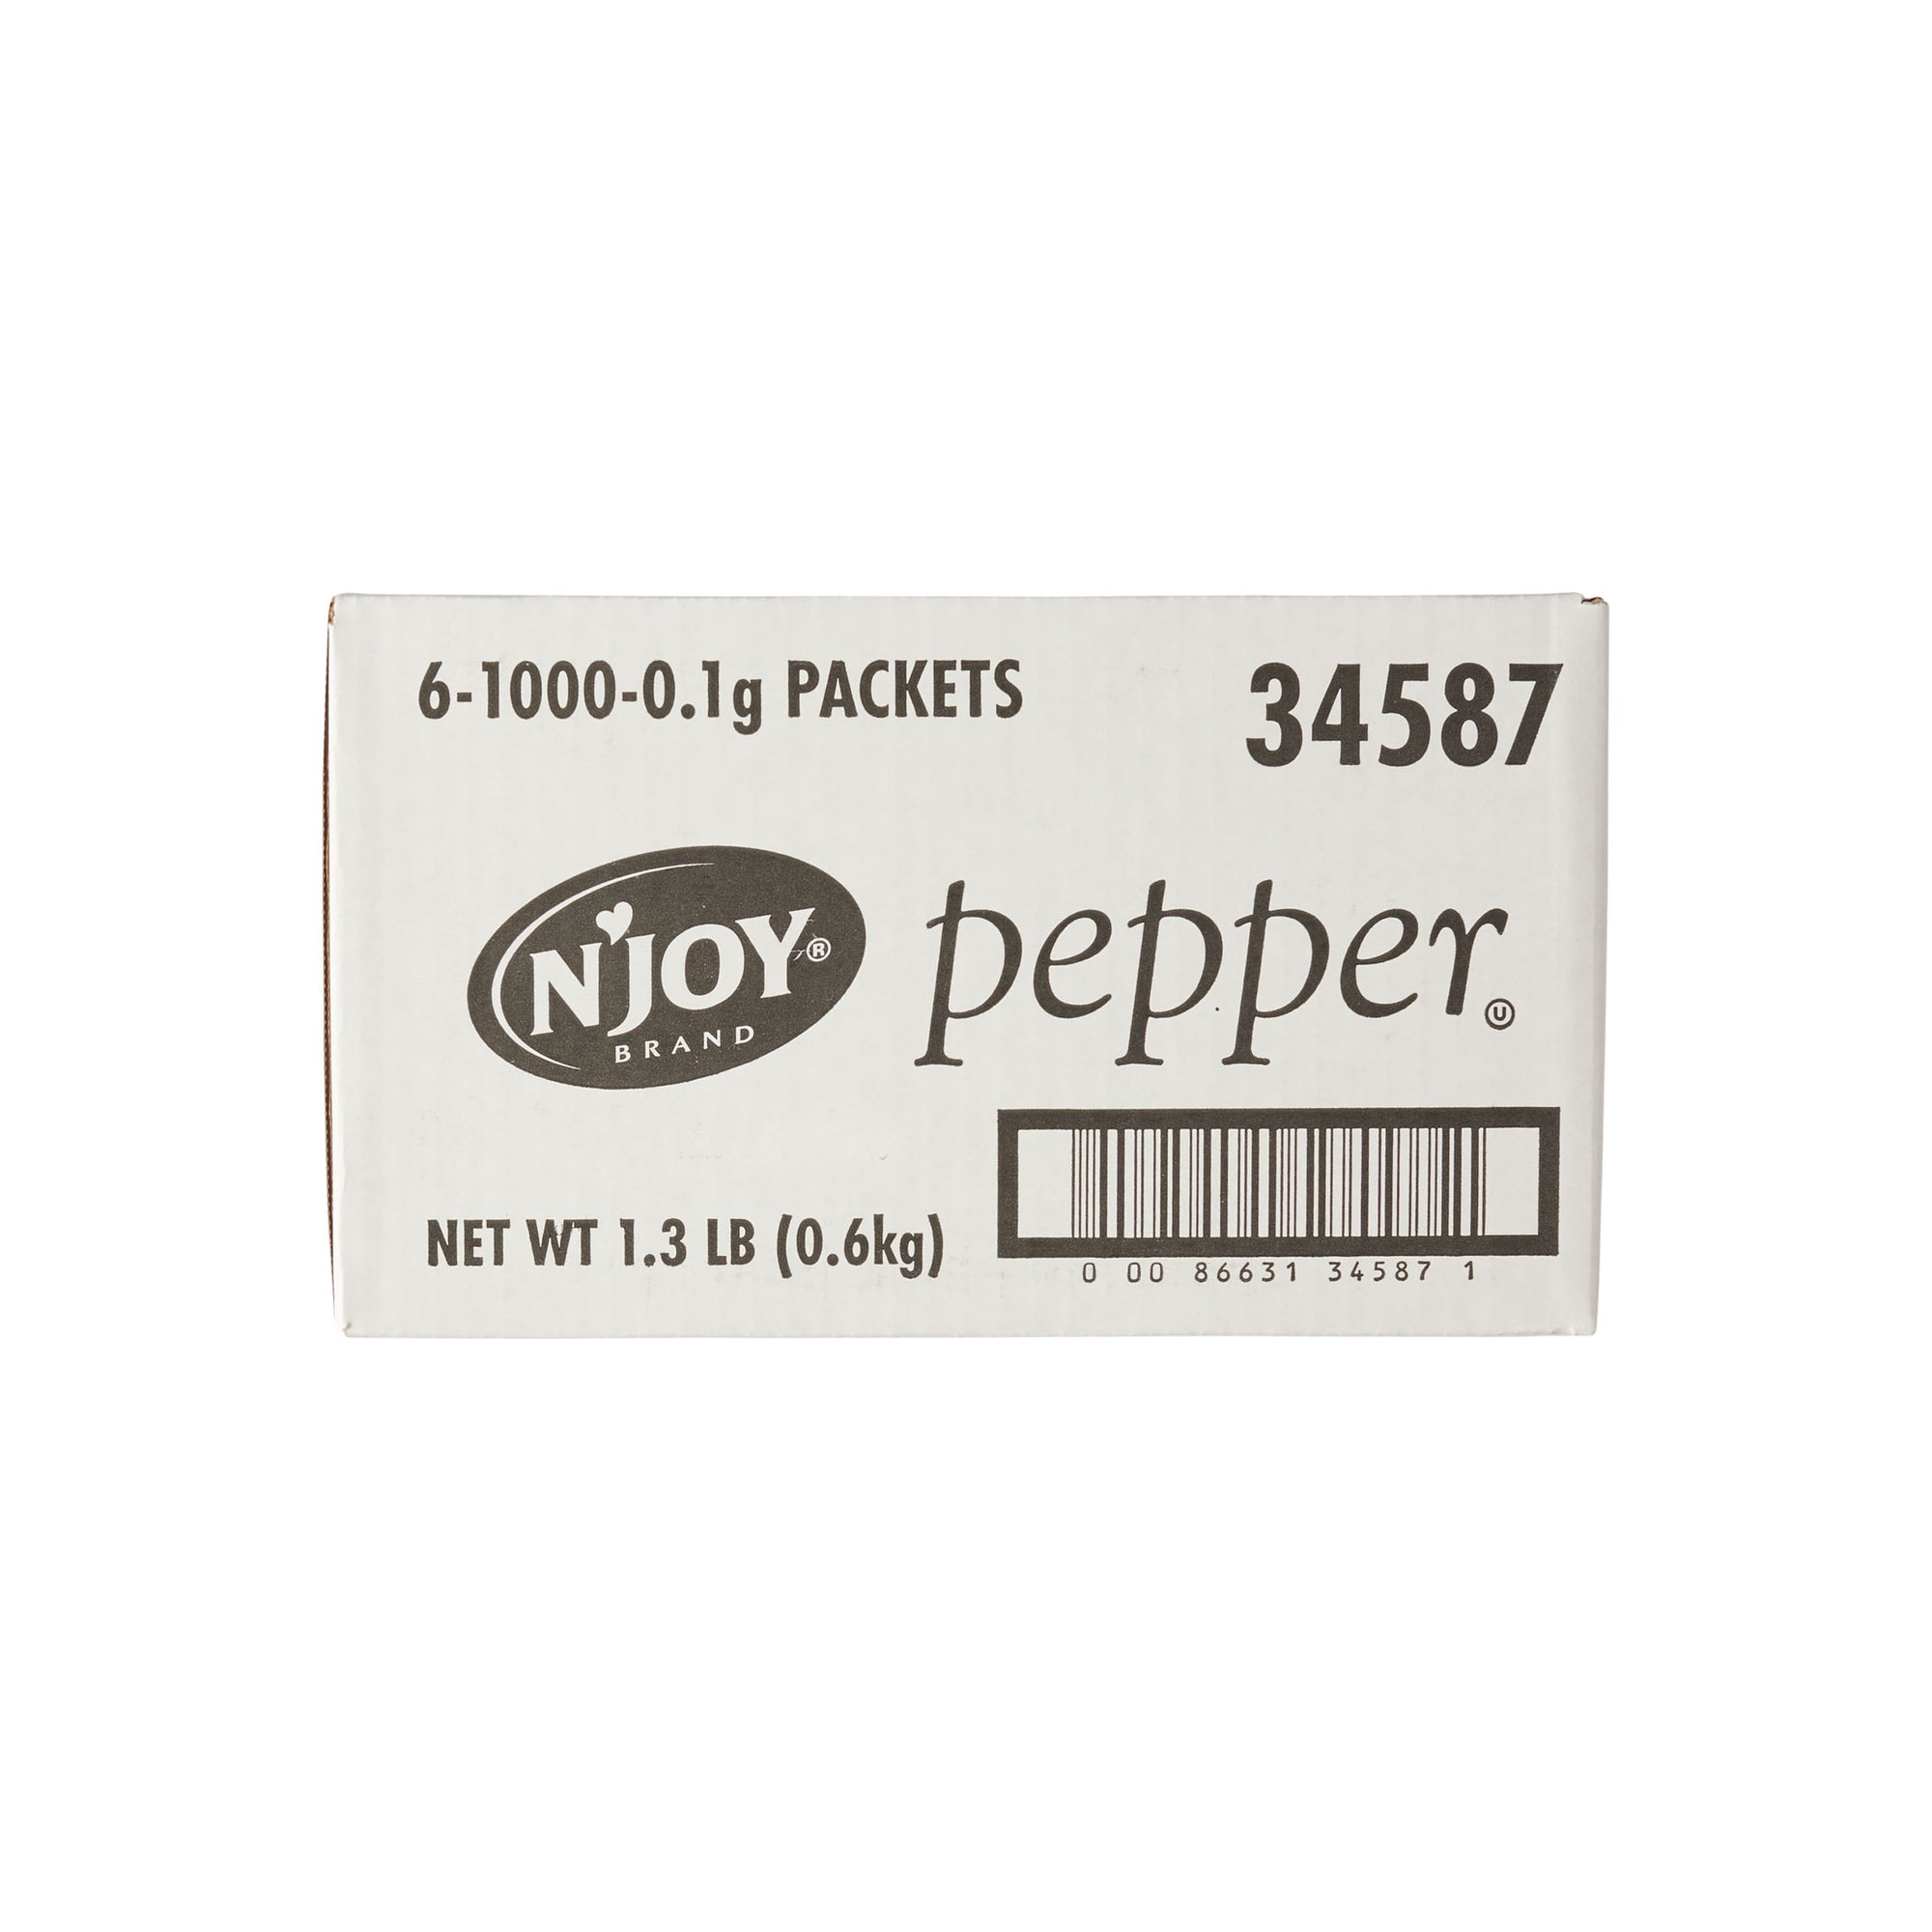 N'JOY PEPPER PACKETS, 6 - 1000 - 0.1 GR